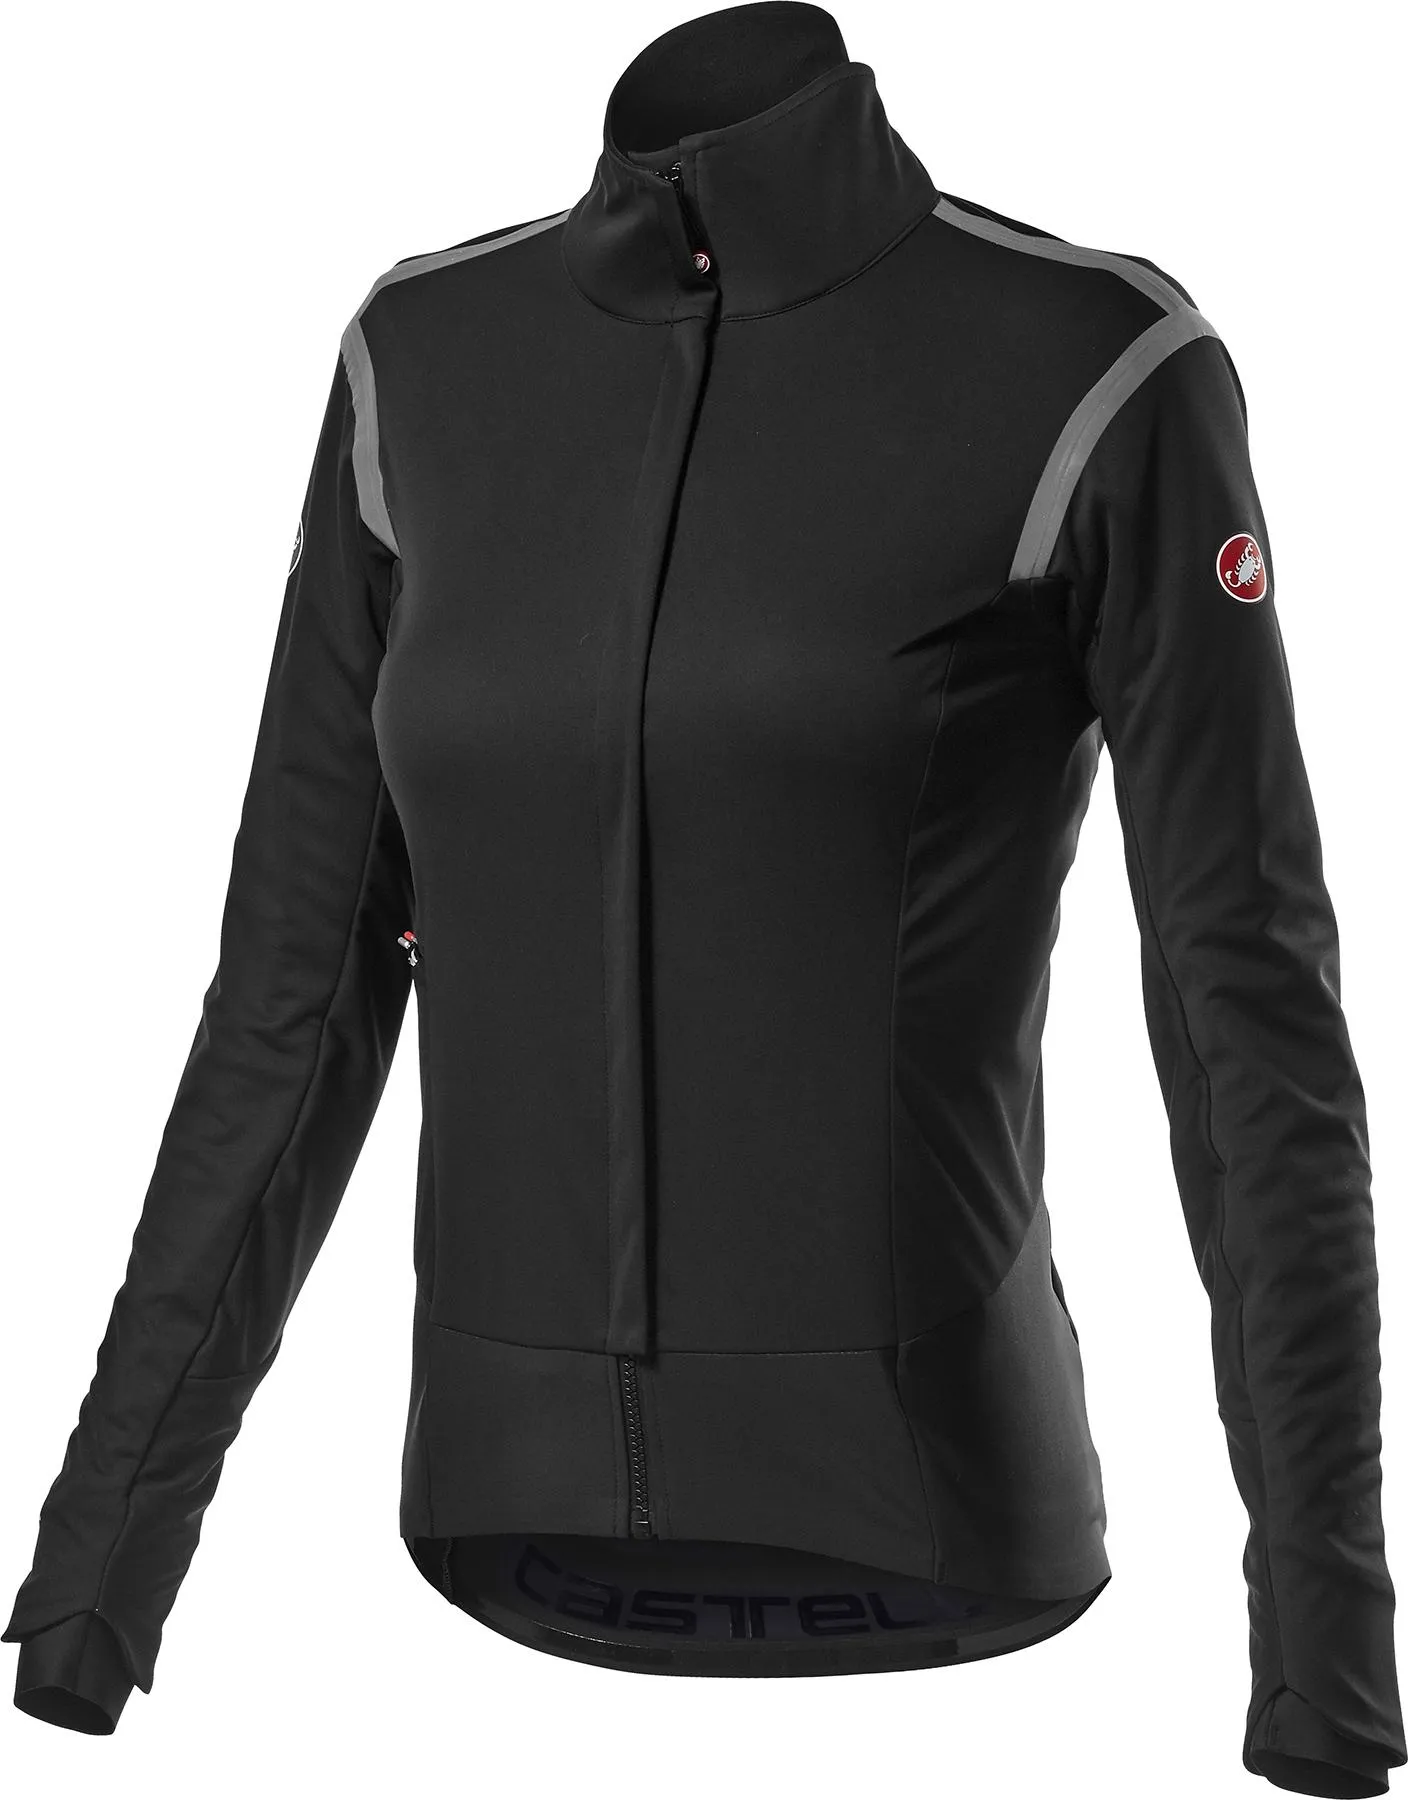  Women's Alpha ROS 2 Jacket, Light Black